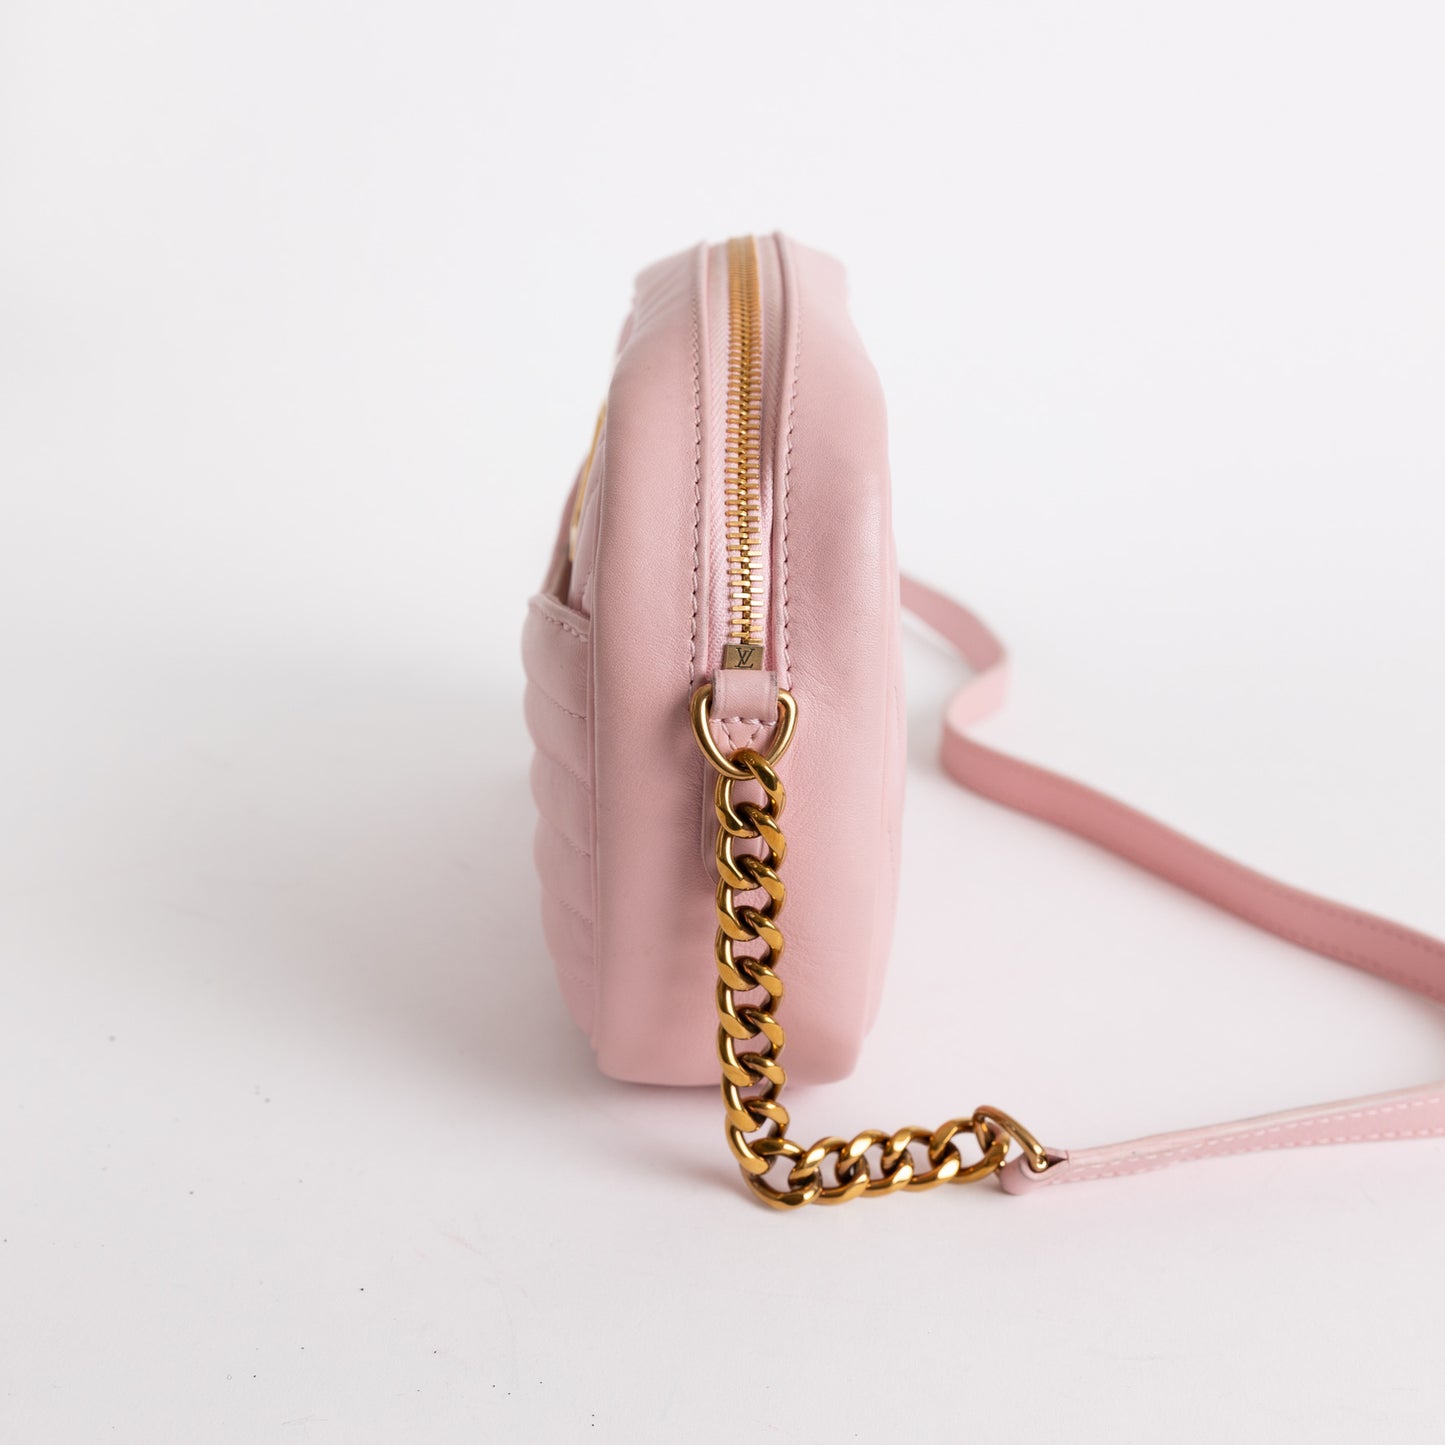 Louis Vuitton New Wave Camera Bag Pink 4402